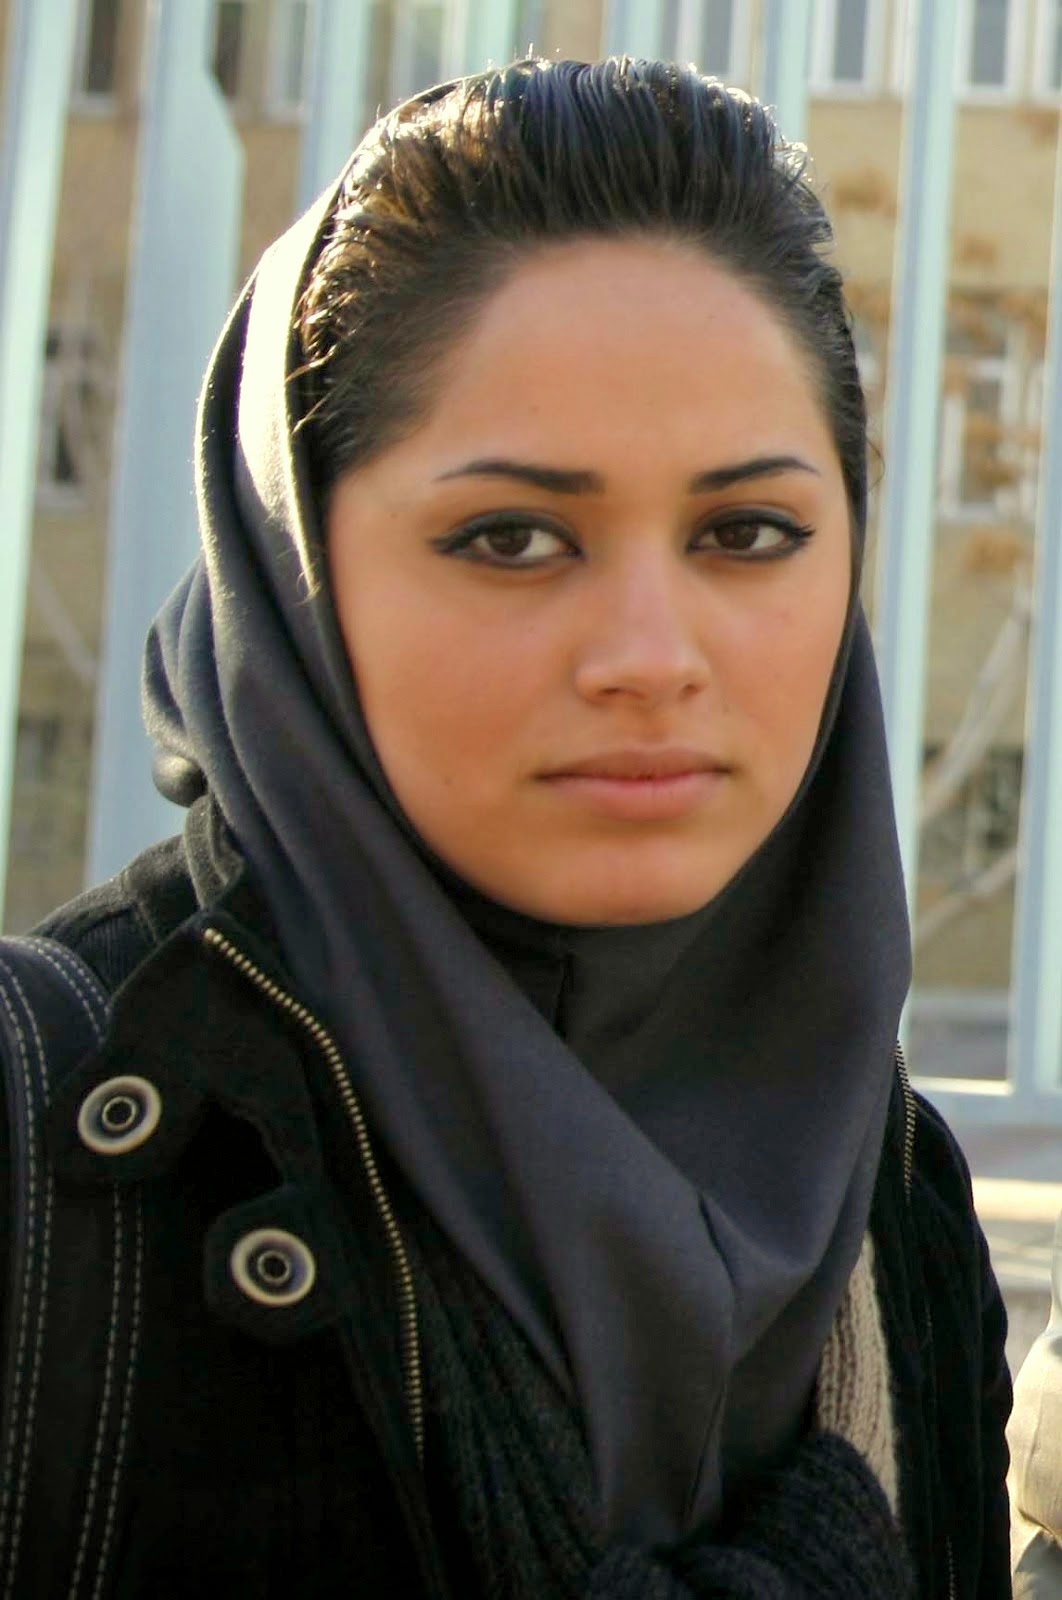 Beautiful HoT Girls Wallpapers Iranian